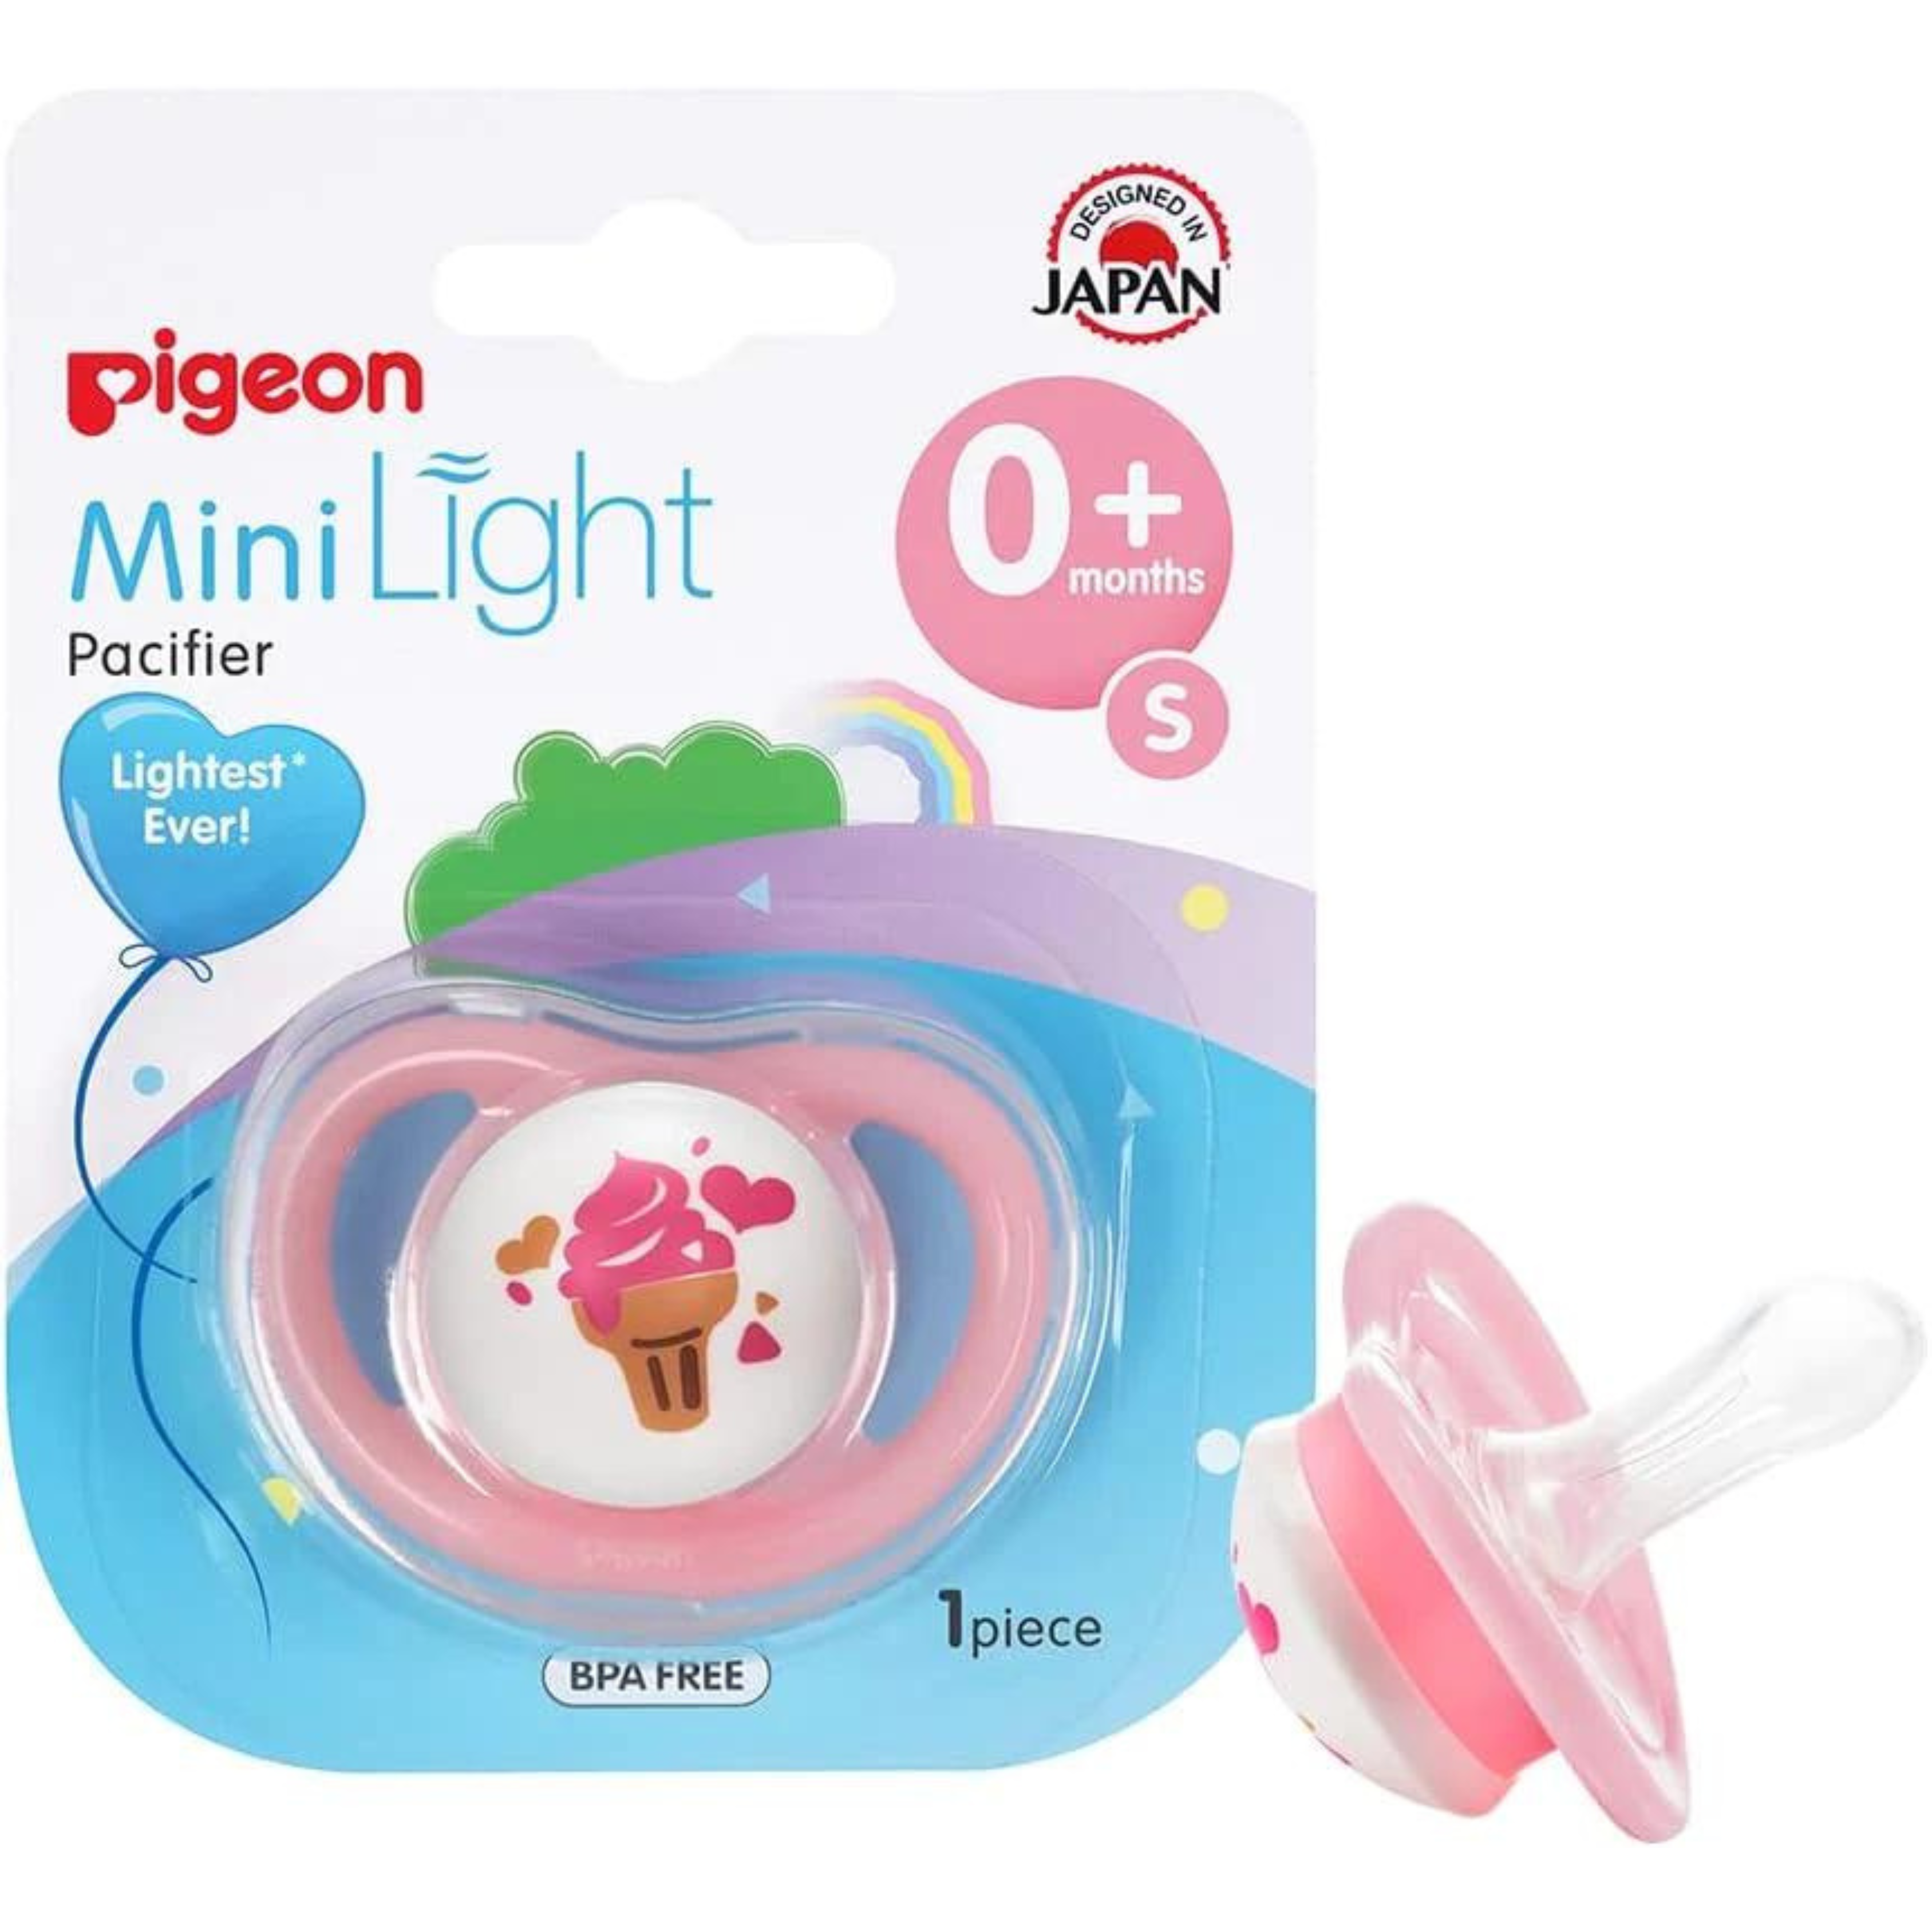 Pigeon Pacifier Small Mini Light 0 + months (NP1665-6)